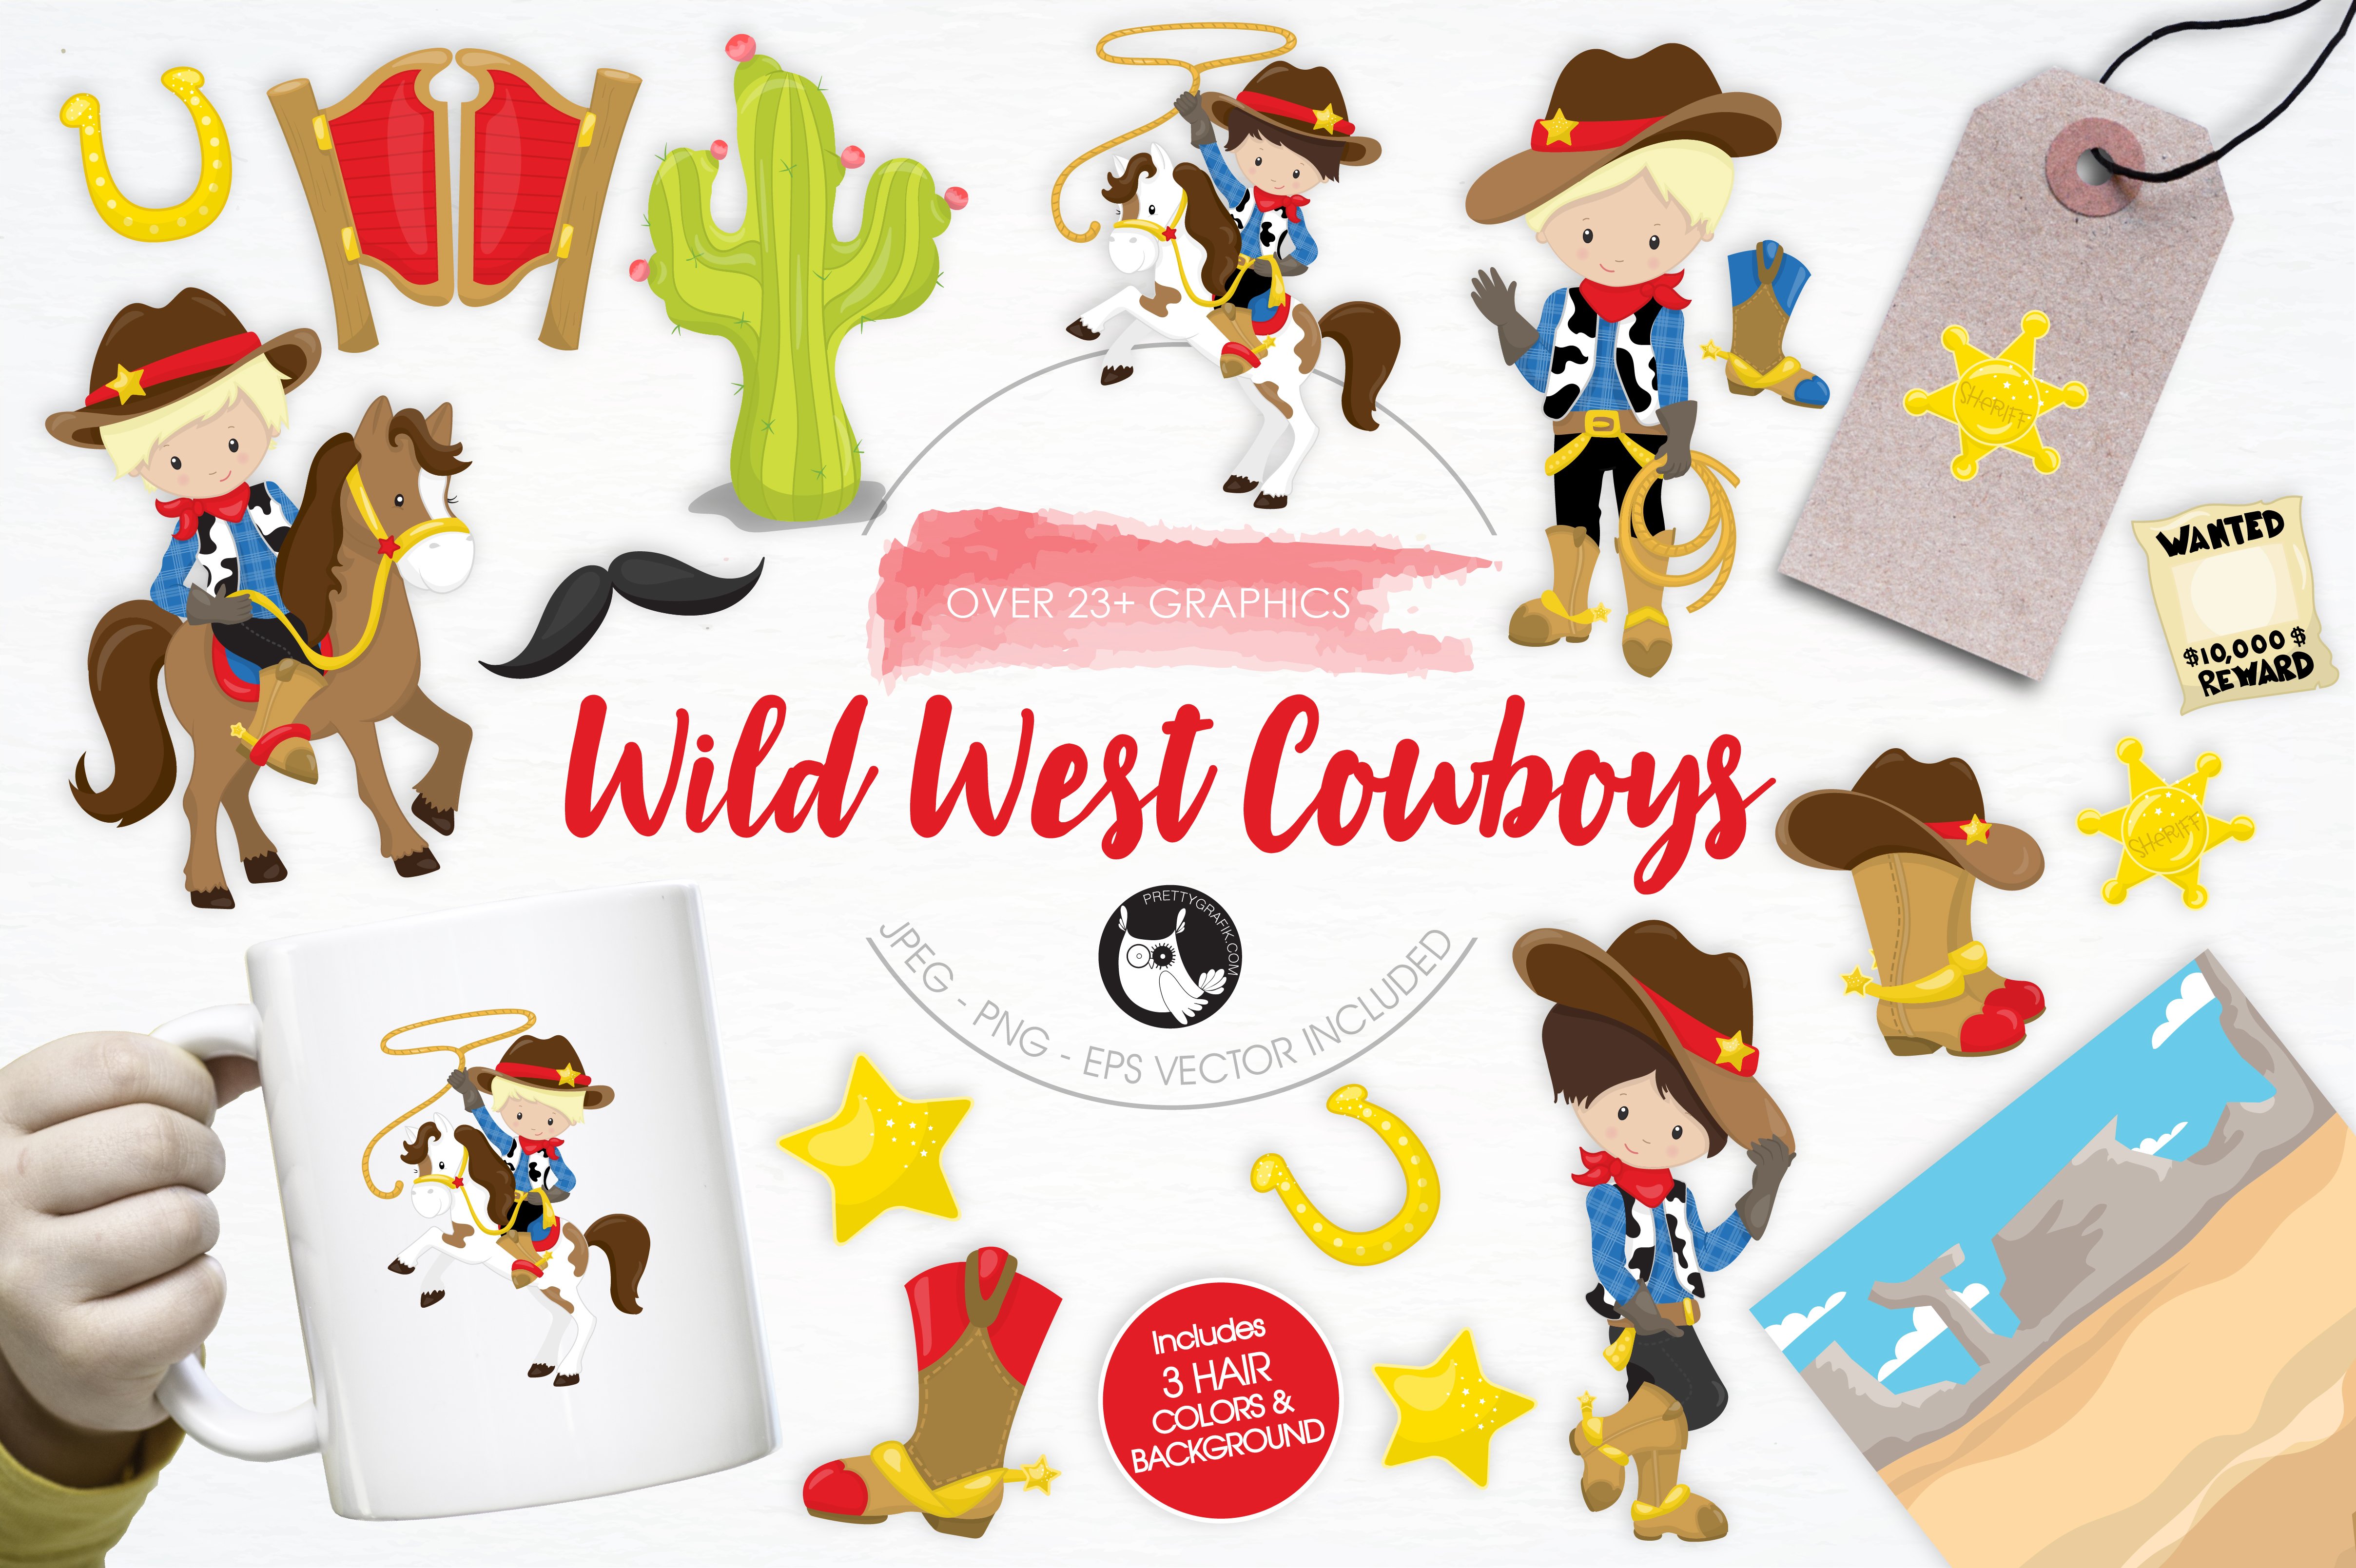 Wild West Cowboys illustration pack - Vector Image